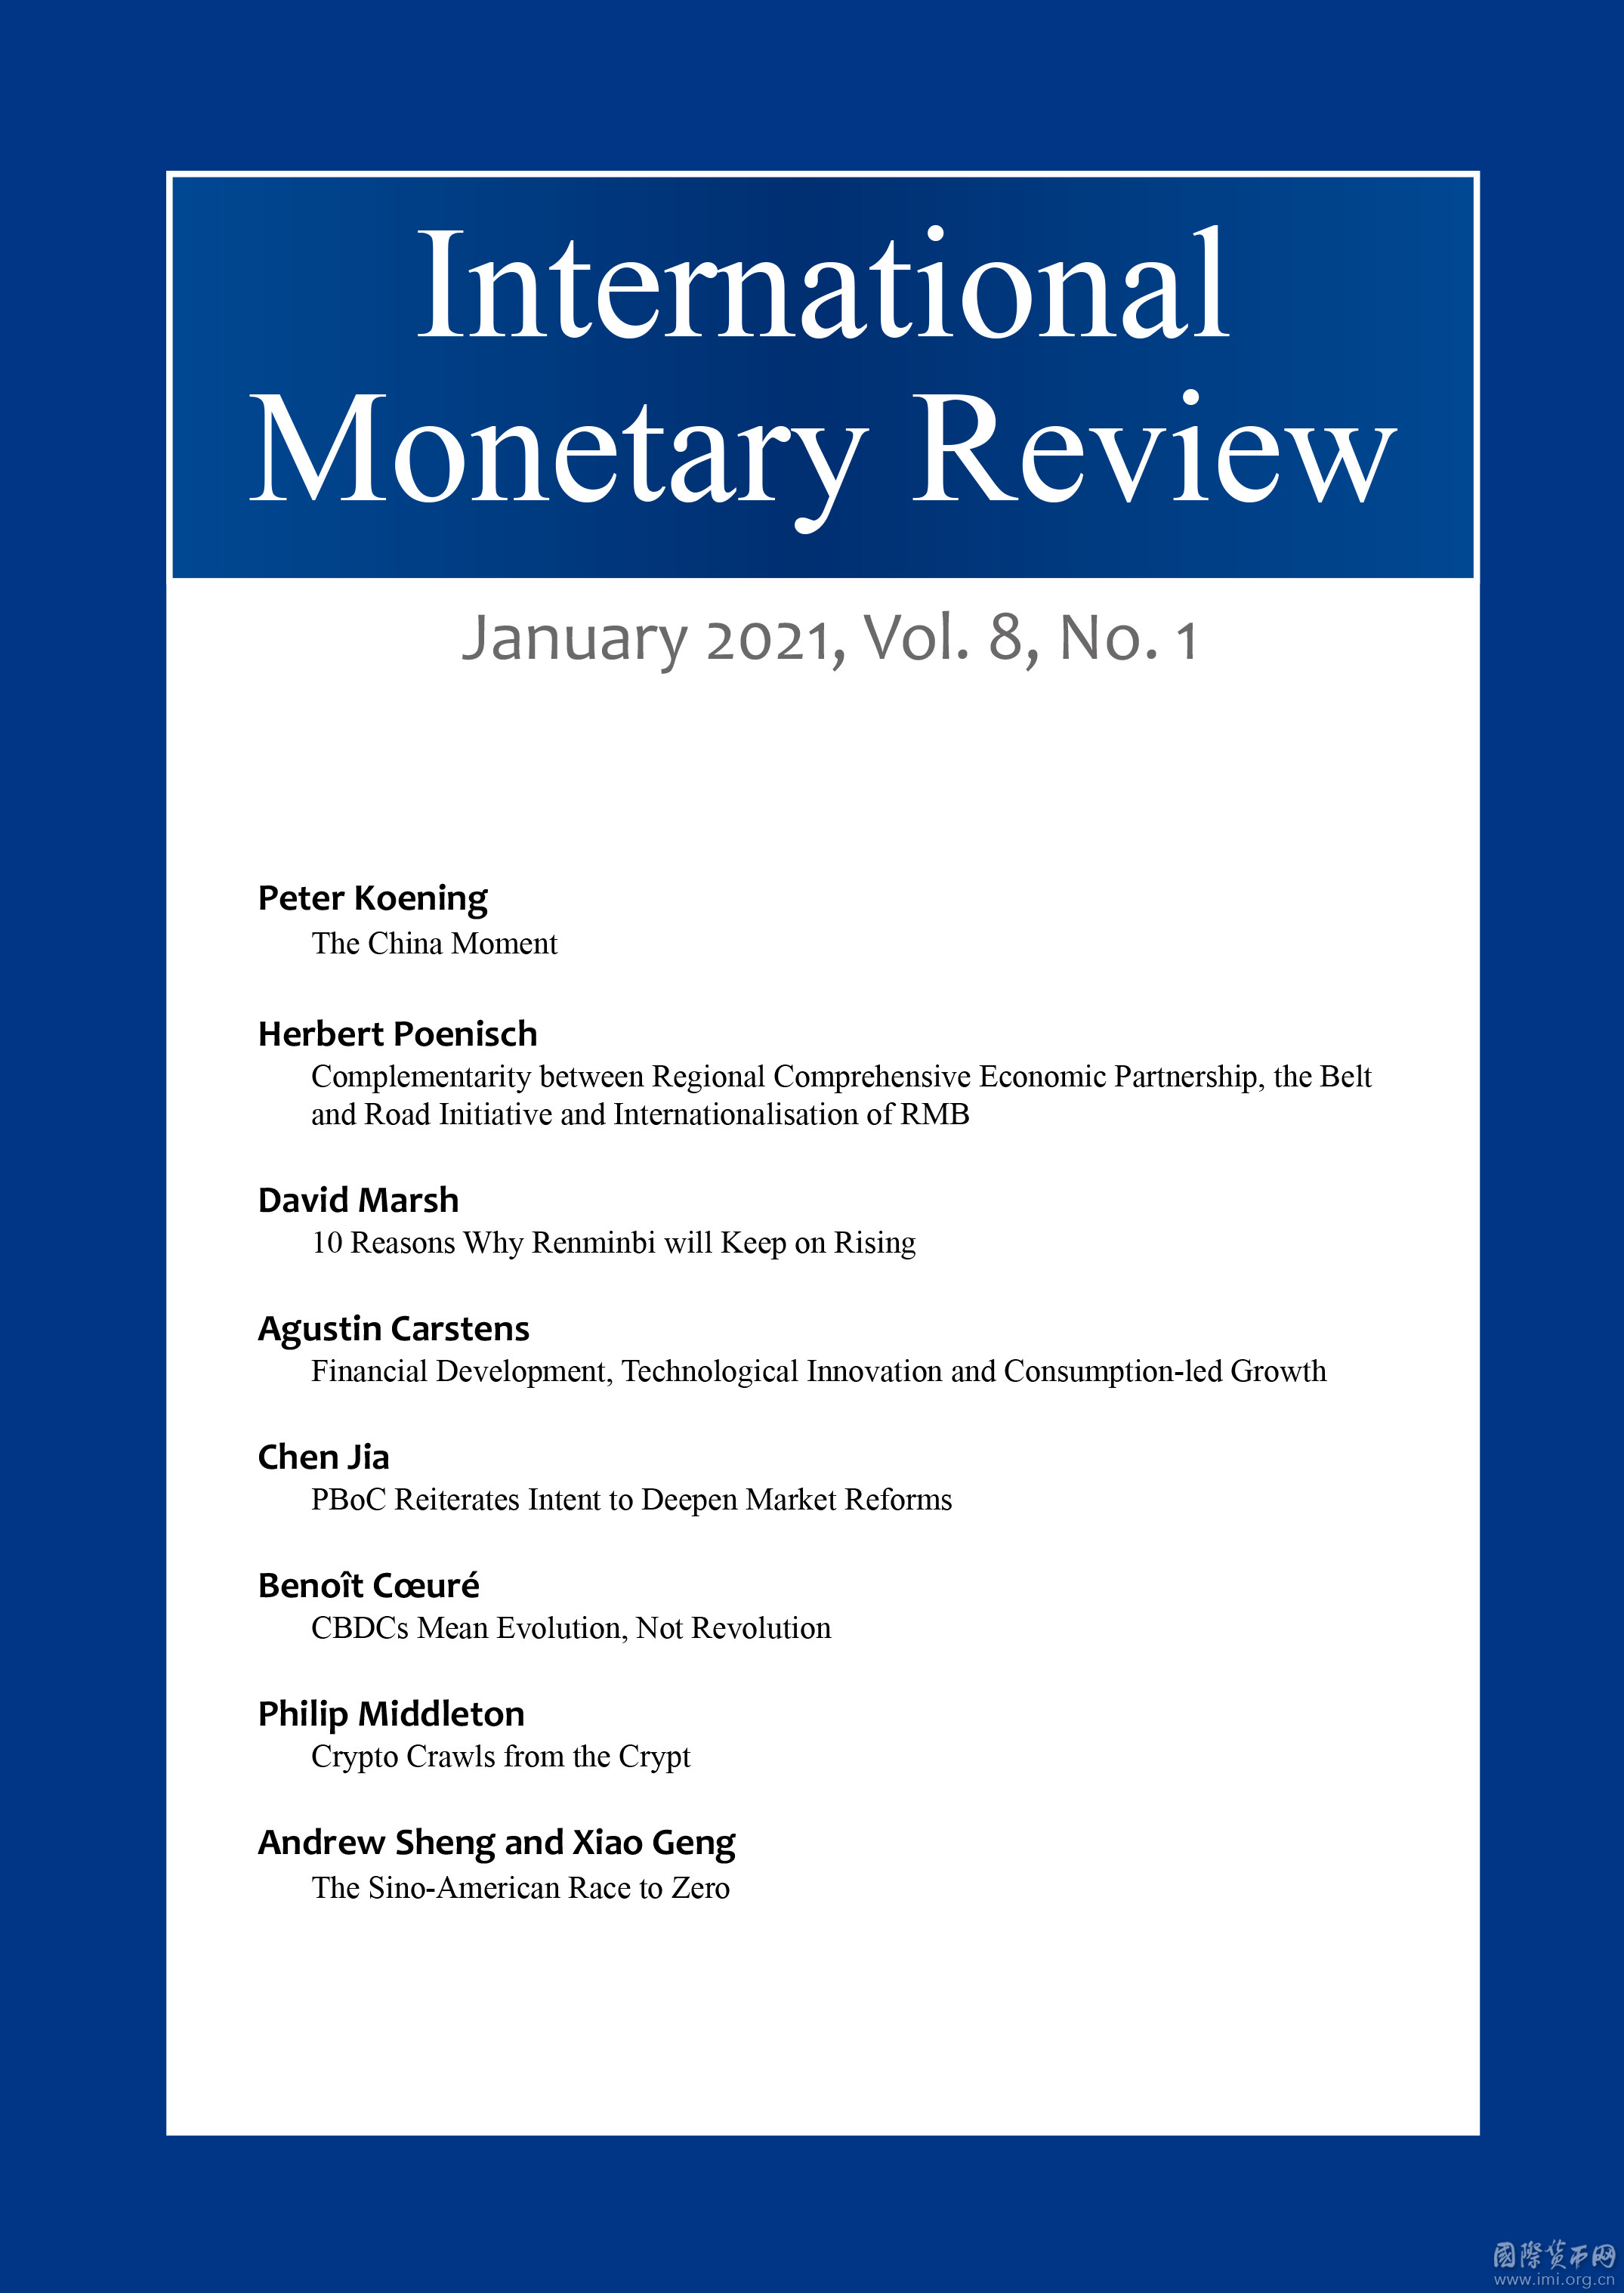 International Monetary Review, January 2021, Vol. 8 No. 1